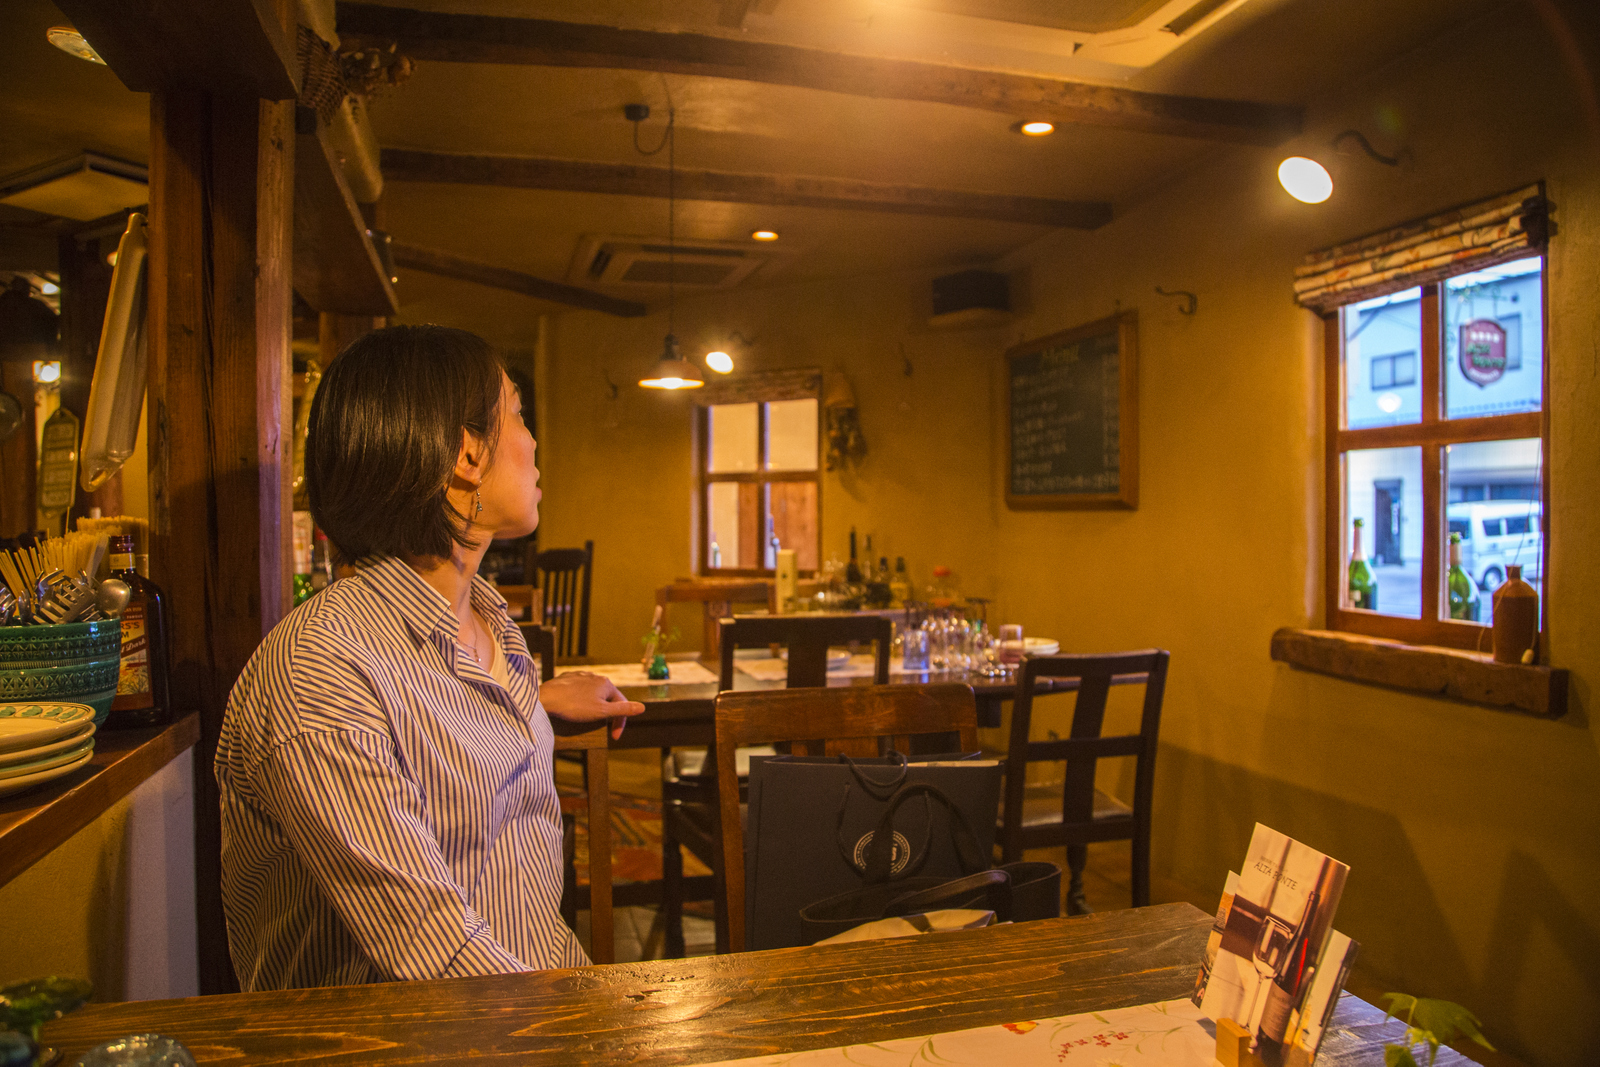 Web Restaurant ソルトドットコム グルメ レストラン情報 静岡県浜松市中心の 食 コミュニケーションサイト